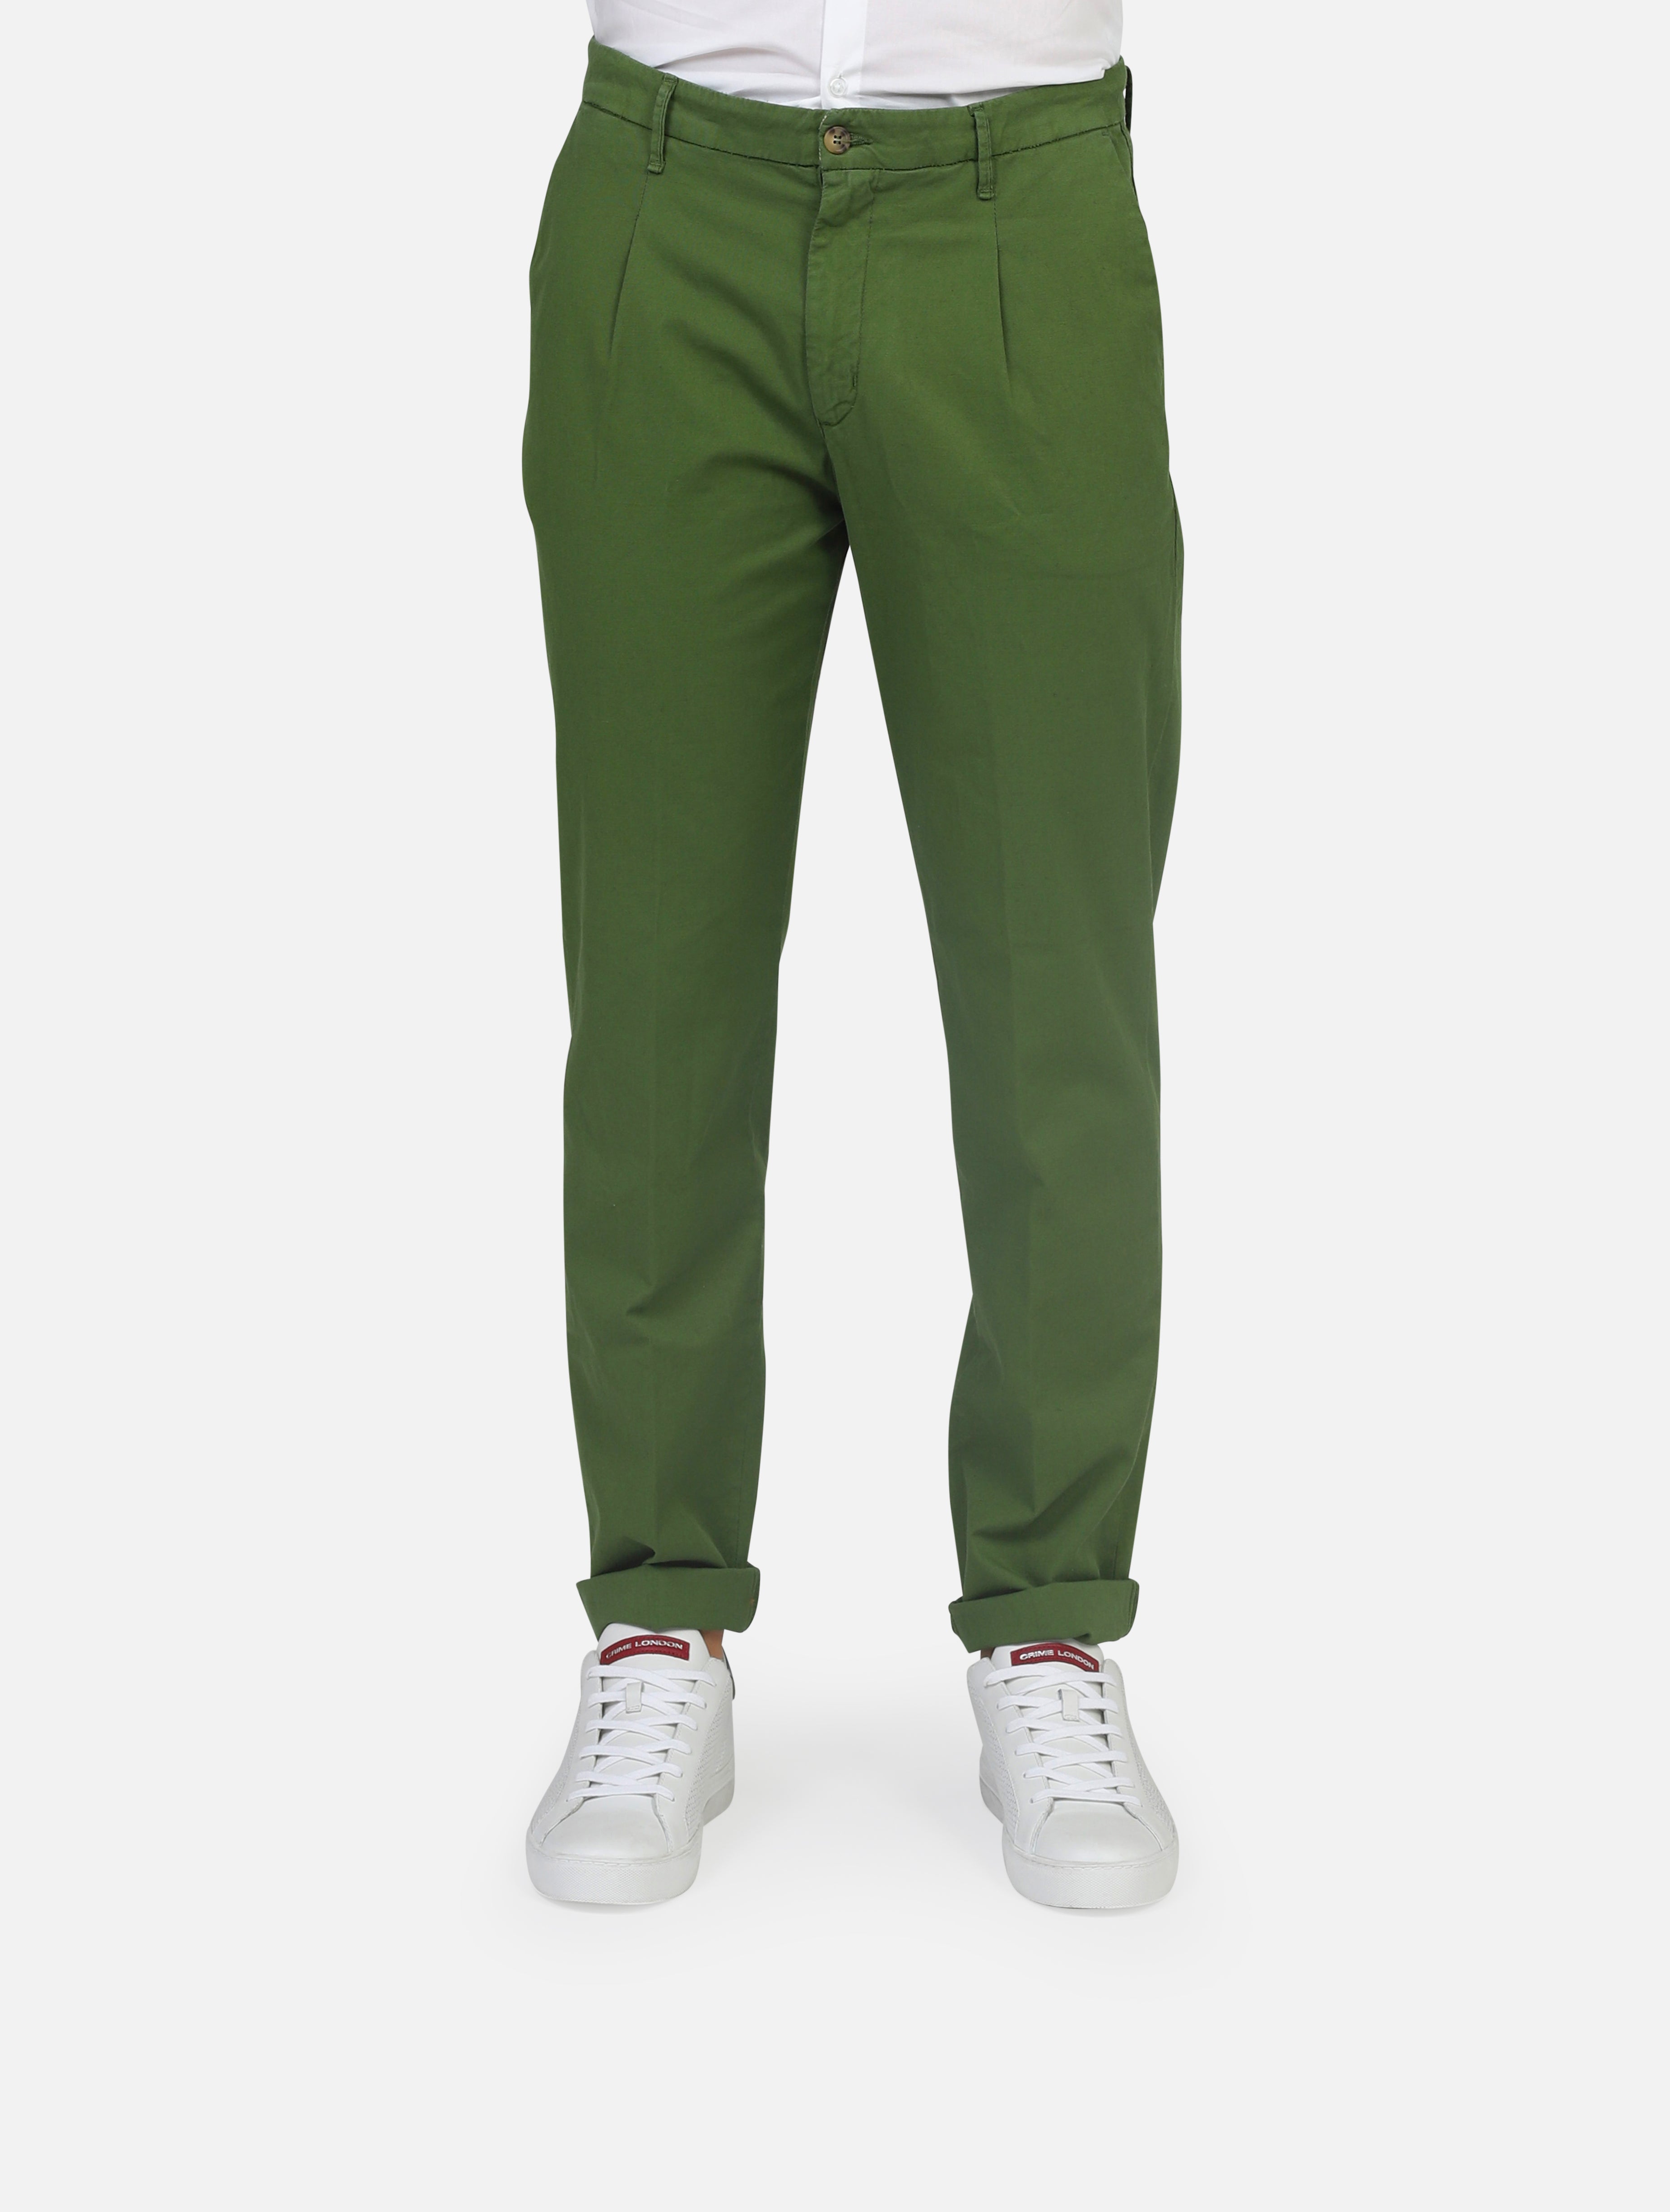 Pantalone squad  verde foglia uomo 